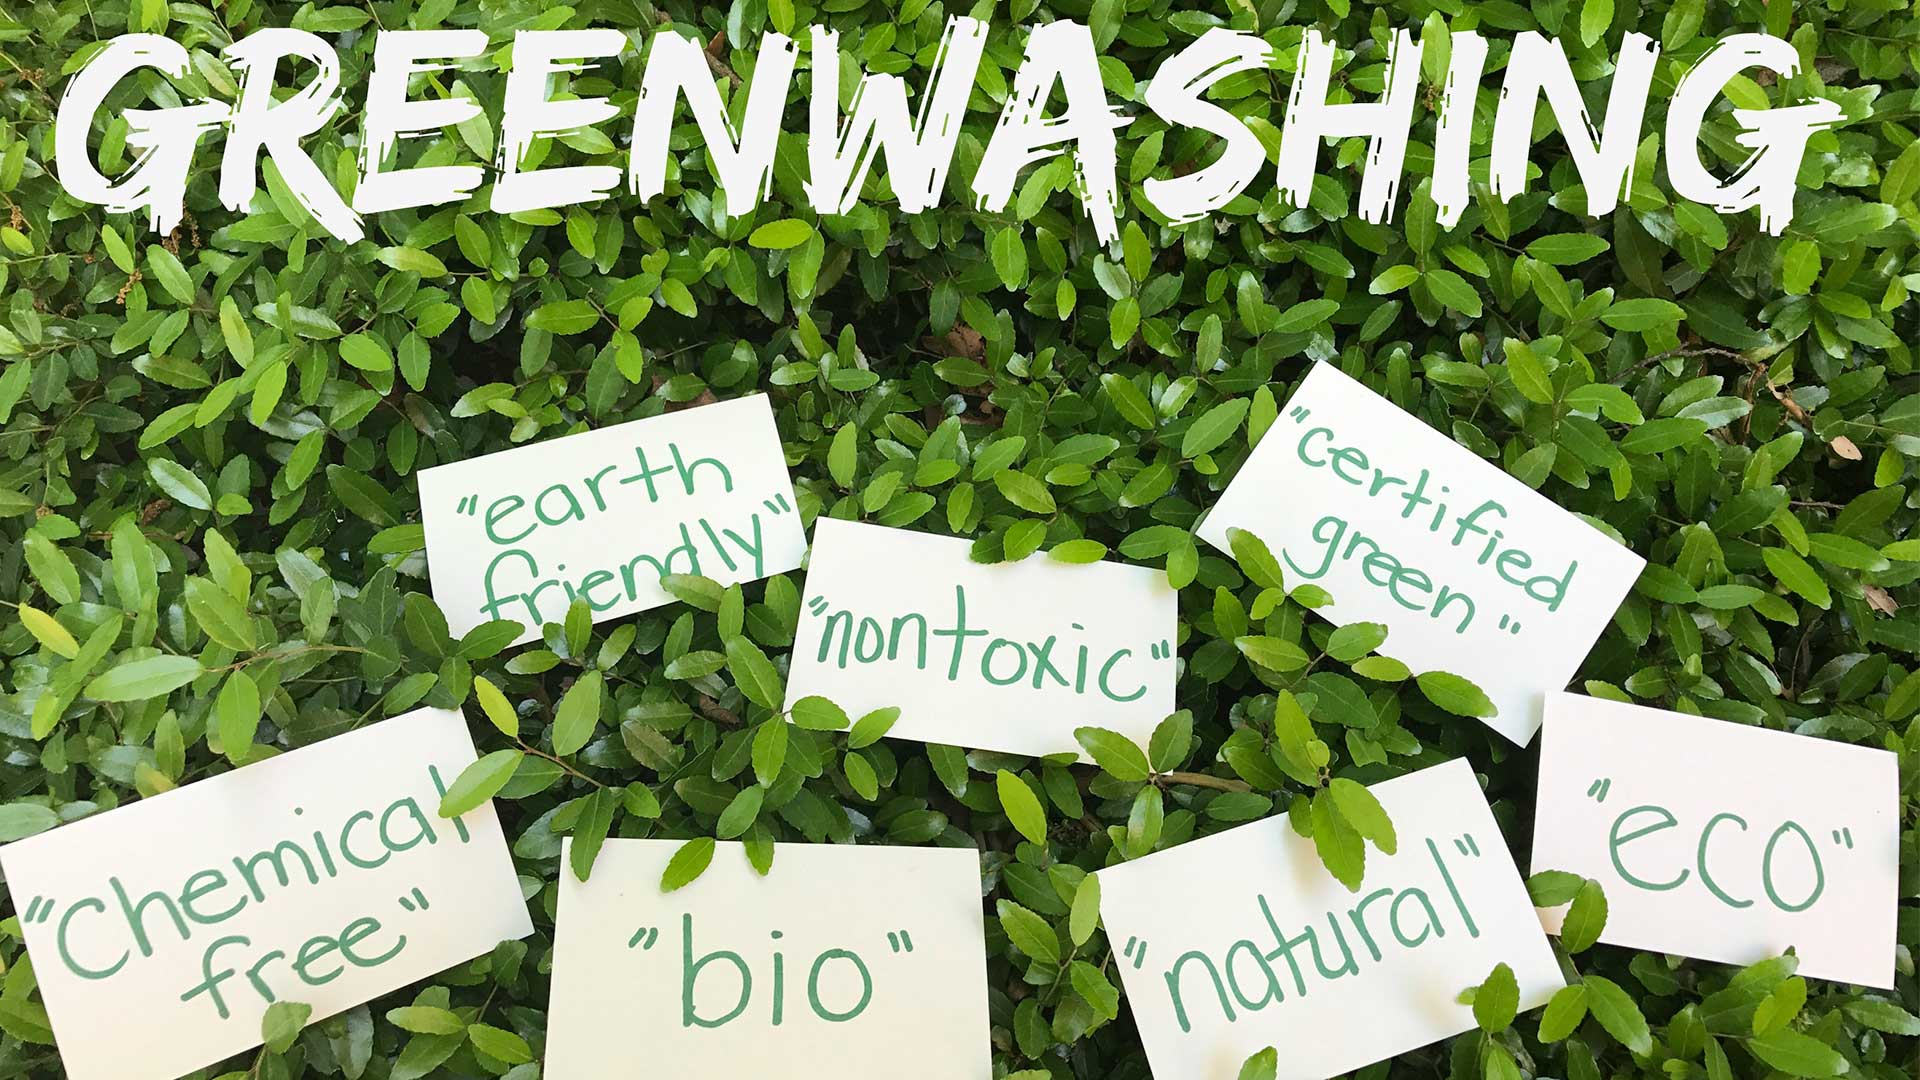 Sustainable Greenwashing